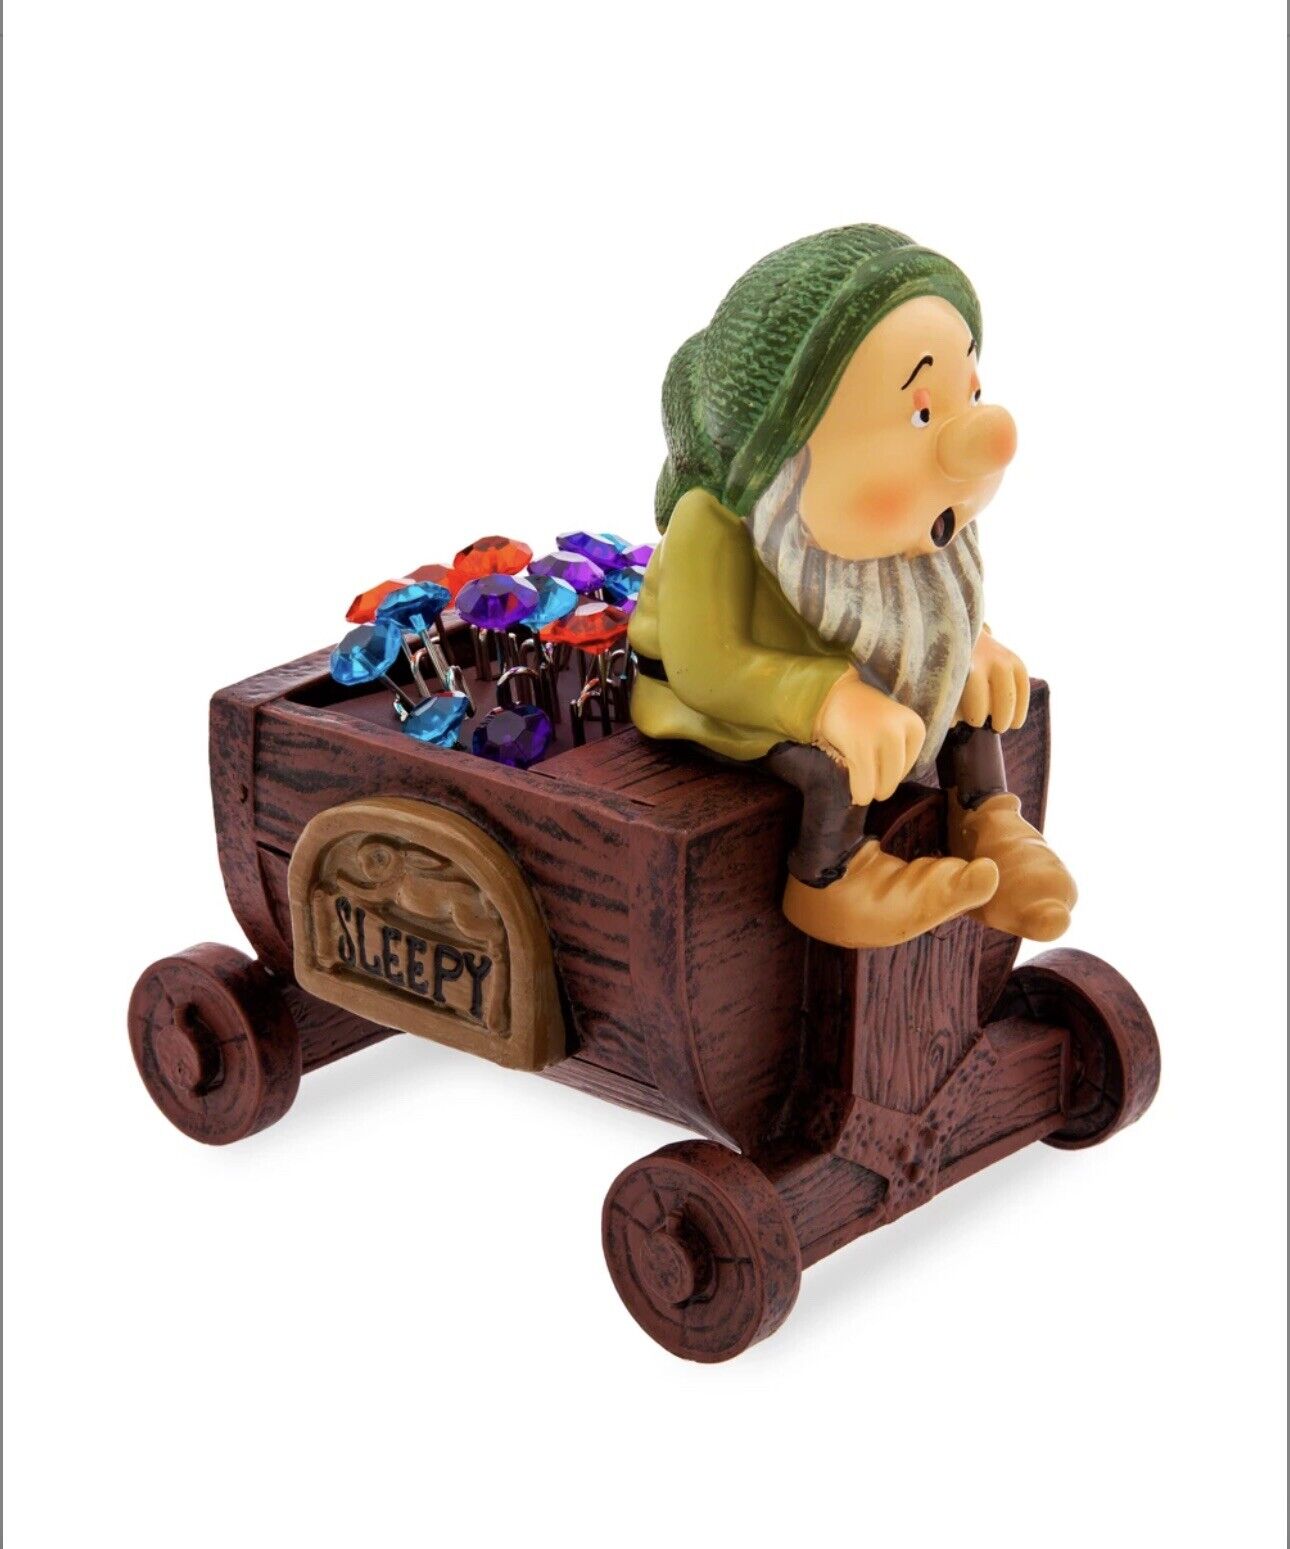 New 85th Anniversary  Snow White & Seven Dwarfs Sleepy Figural Trinket Dish Set